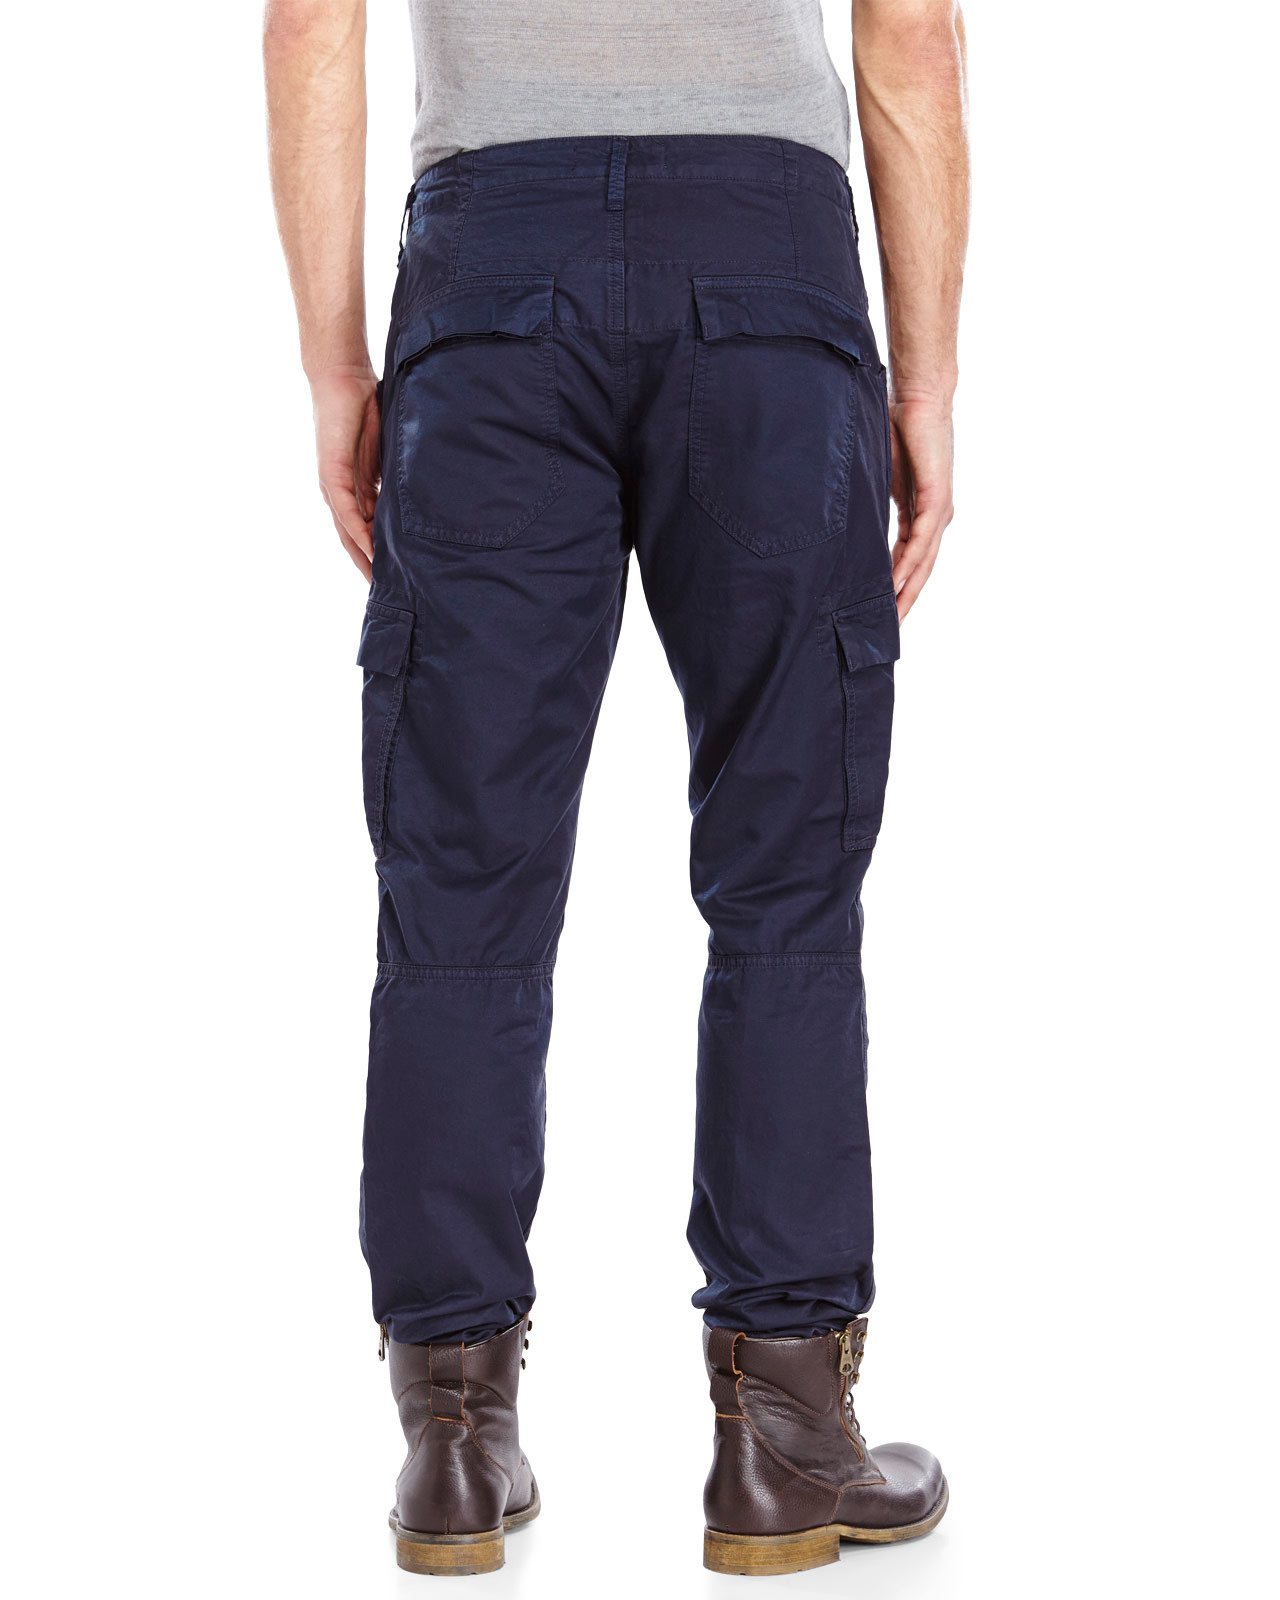 J Brand Clean Trooper Slim Fit Cargo Pants in Navy (Blue) for Men - Lyst